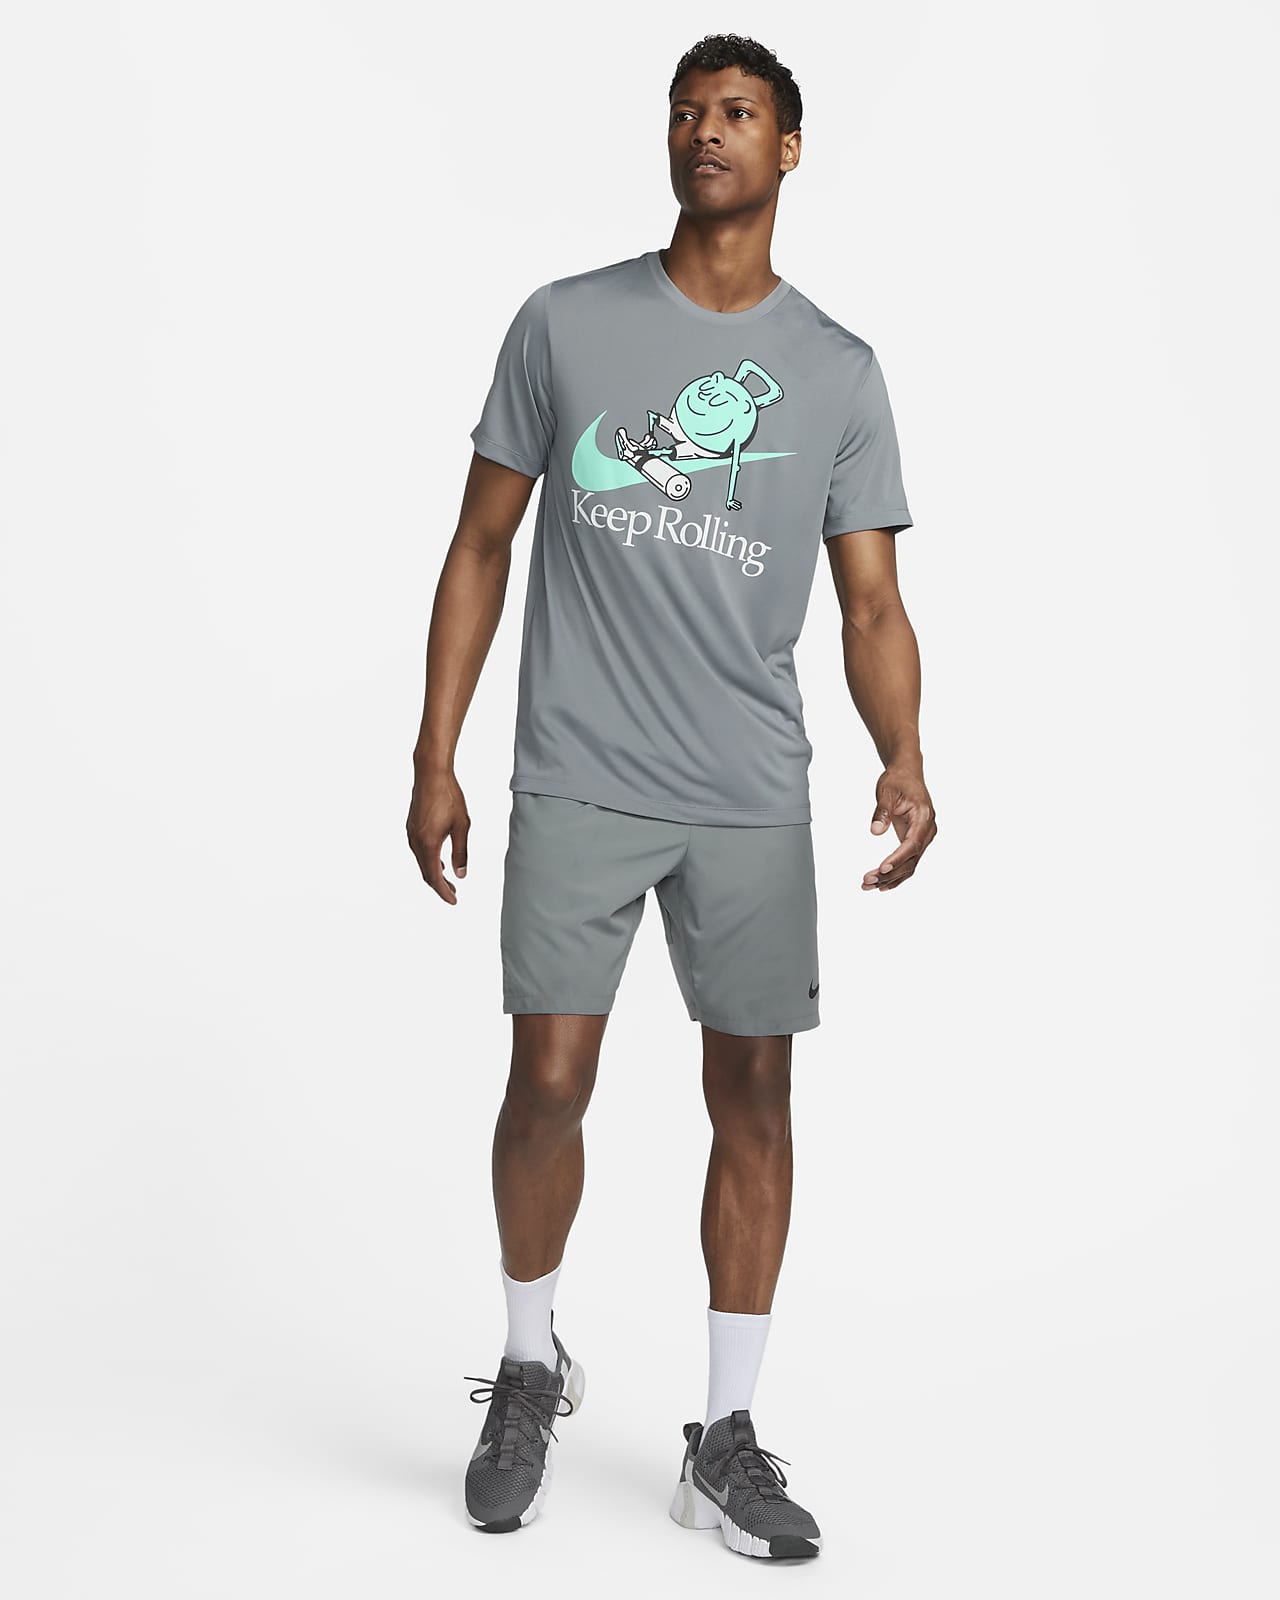 T-shirts Nike pour Homme, T-Shirts et Tops Nike Dri-FIT